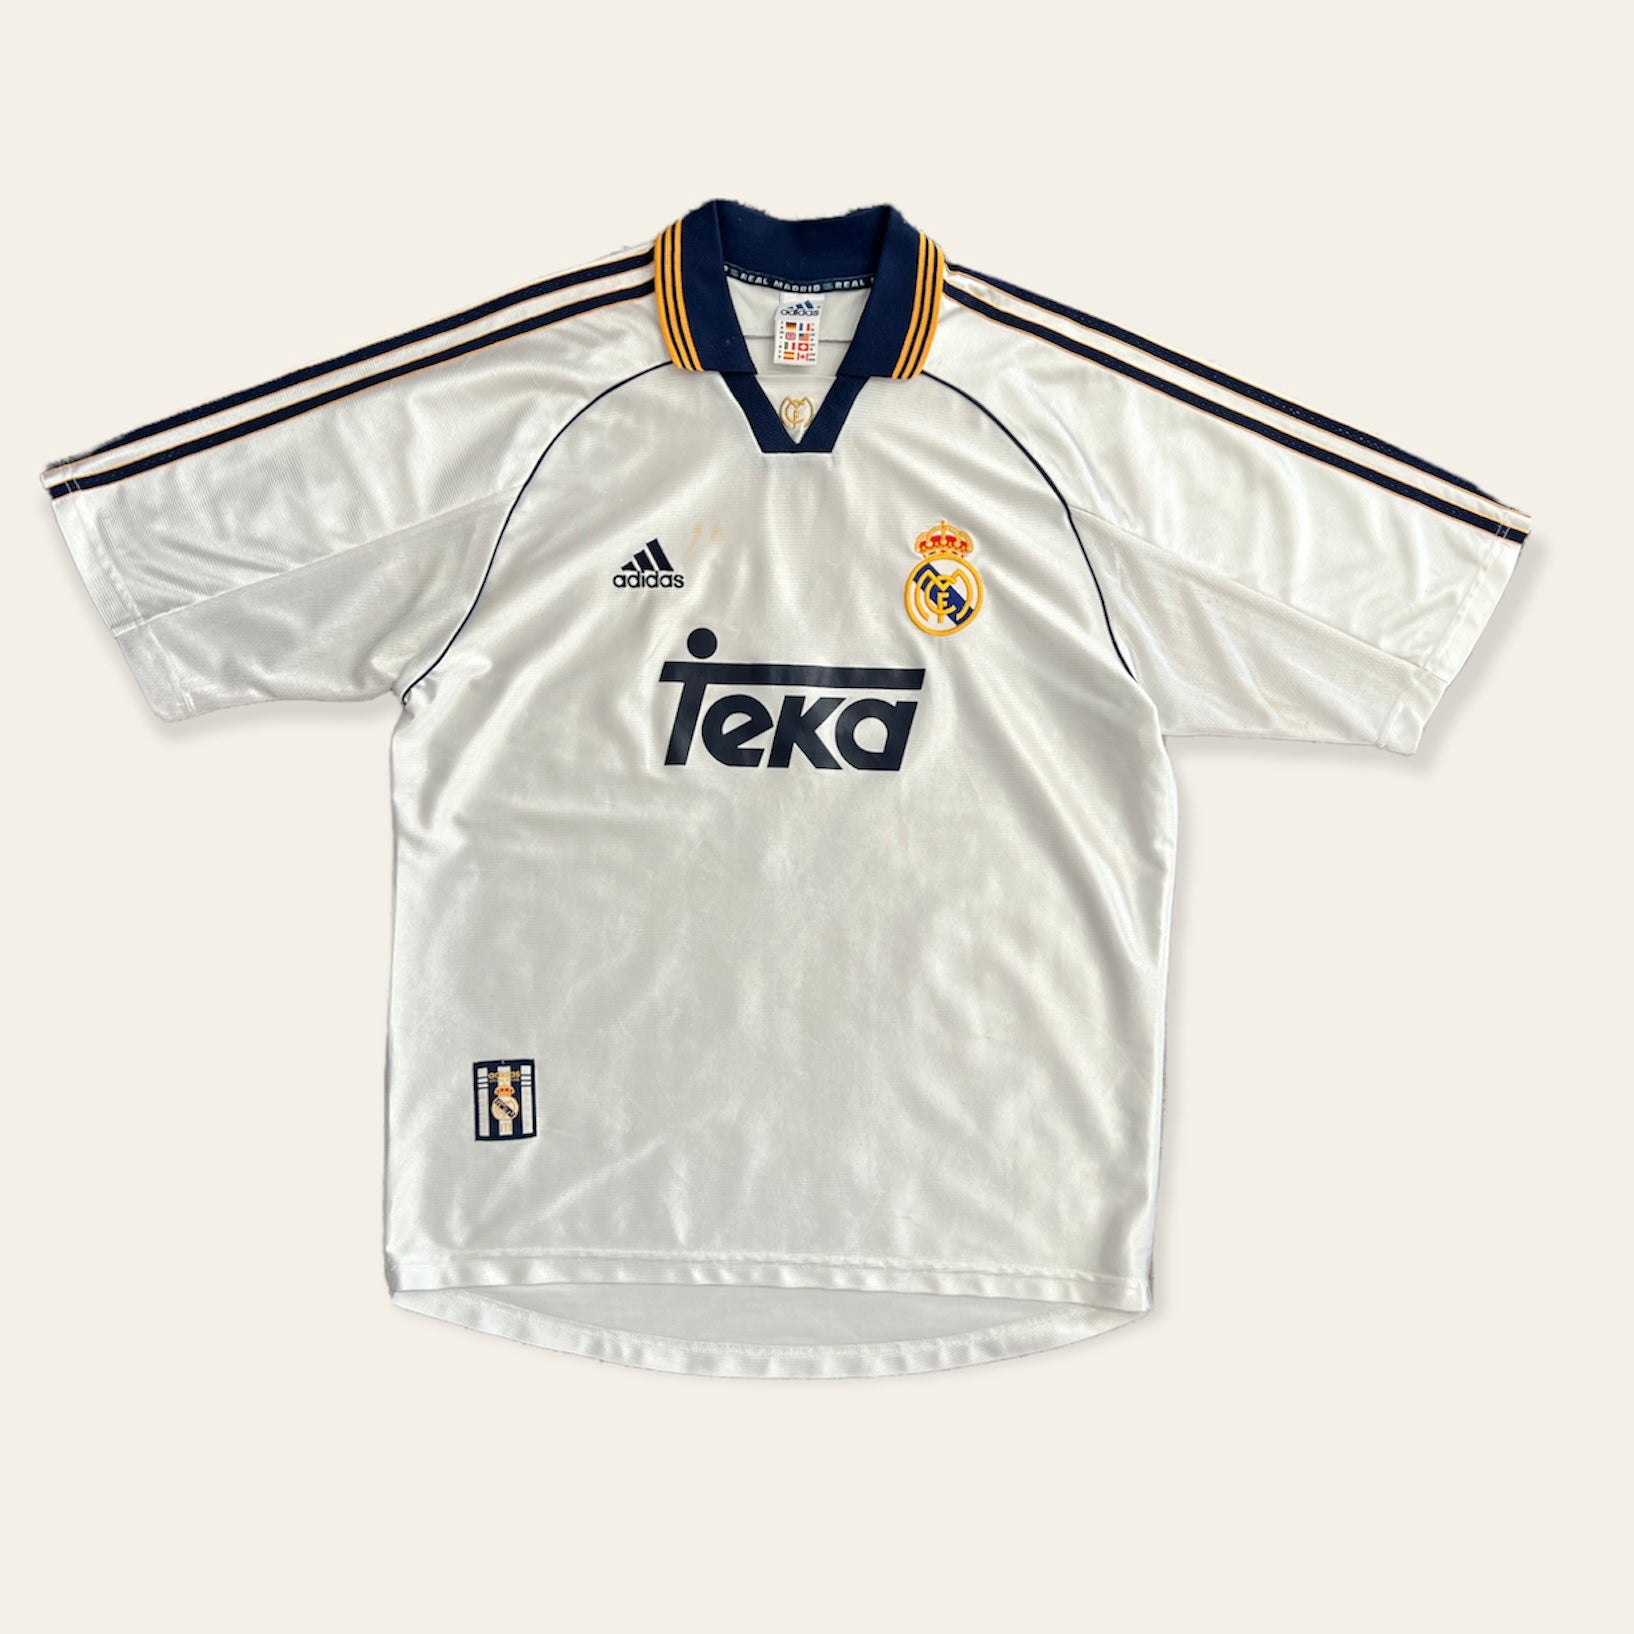 98/99 Real Madrid Redondo Kit Size M